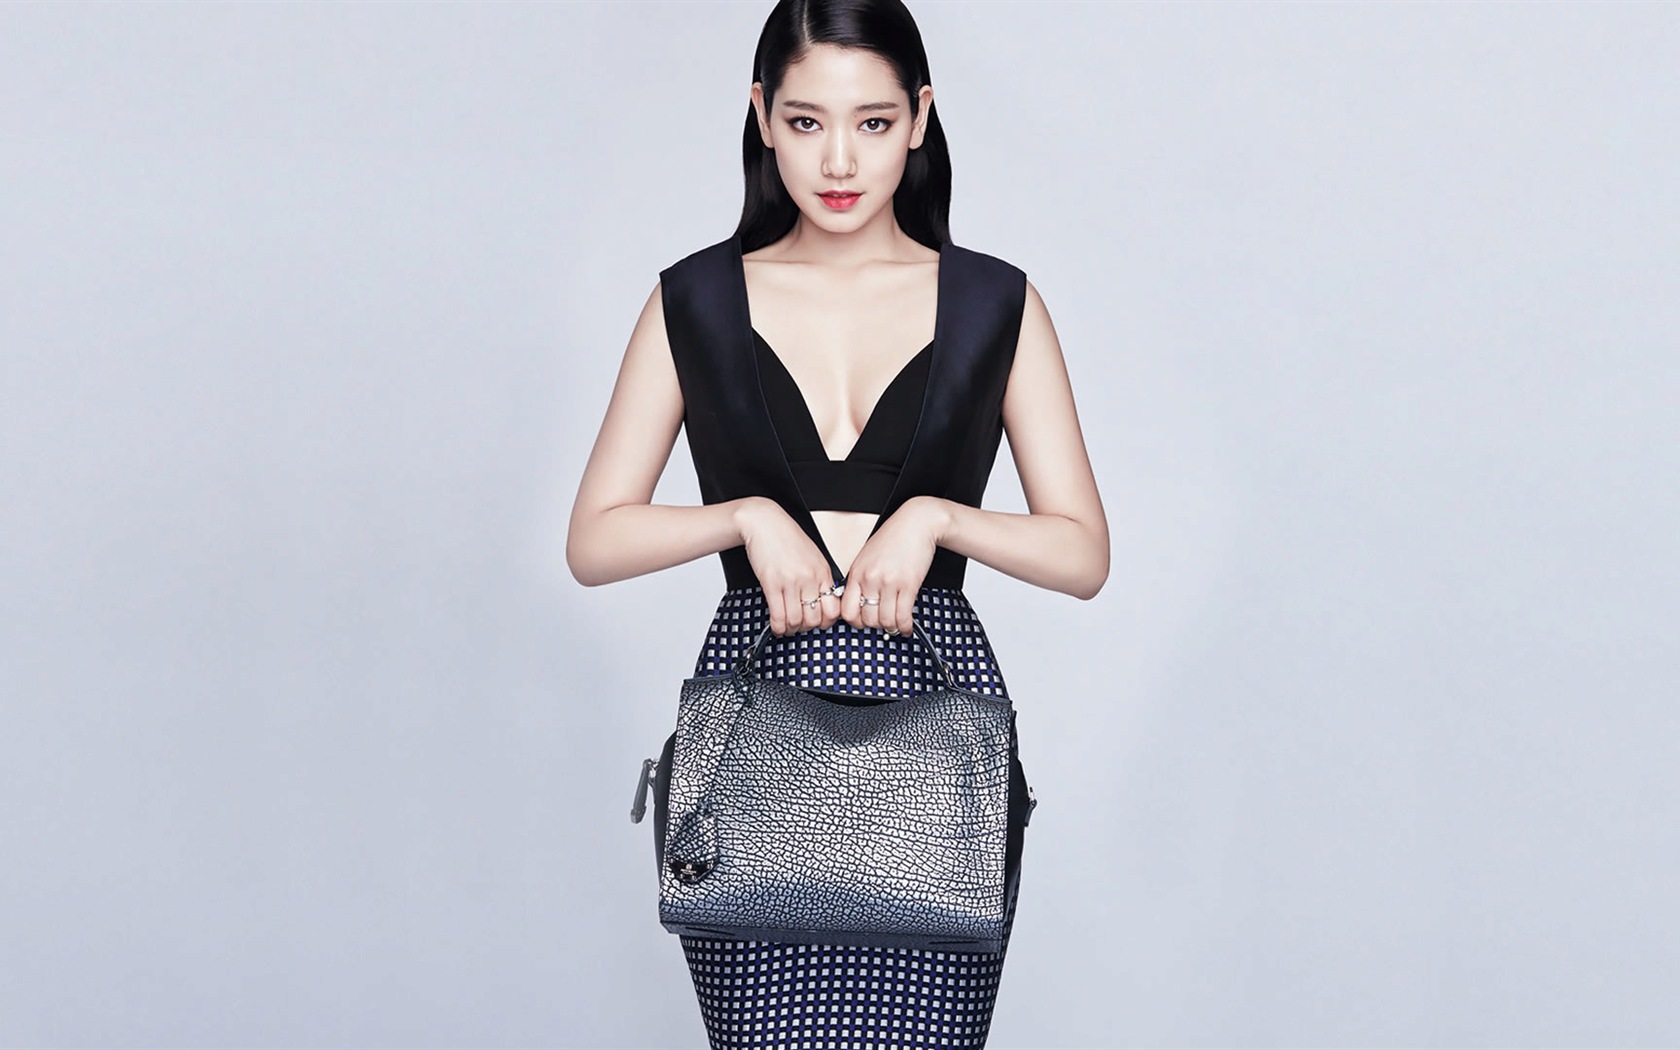 Südkoreanische Schauspielerin Park Shin Hye HD Wallpapers #2 - 1680x1050